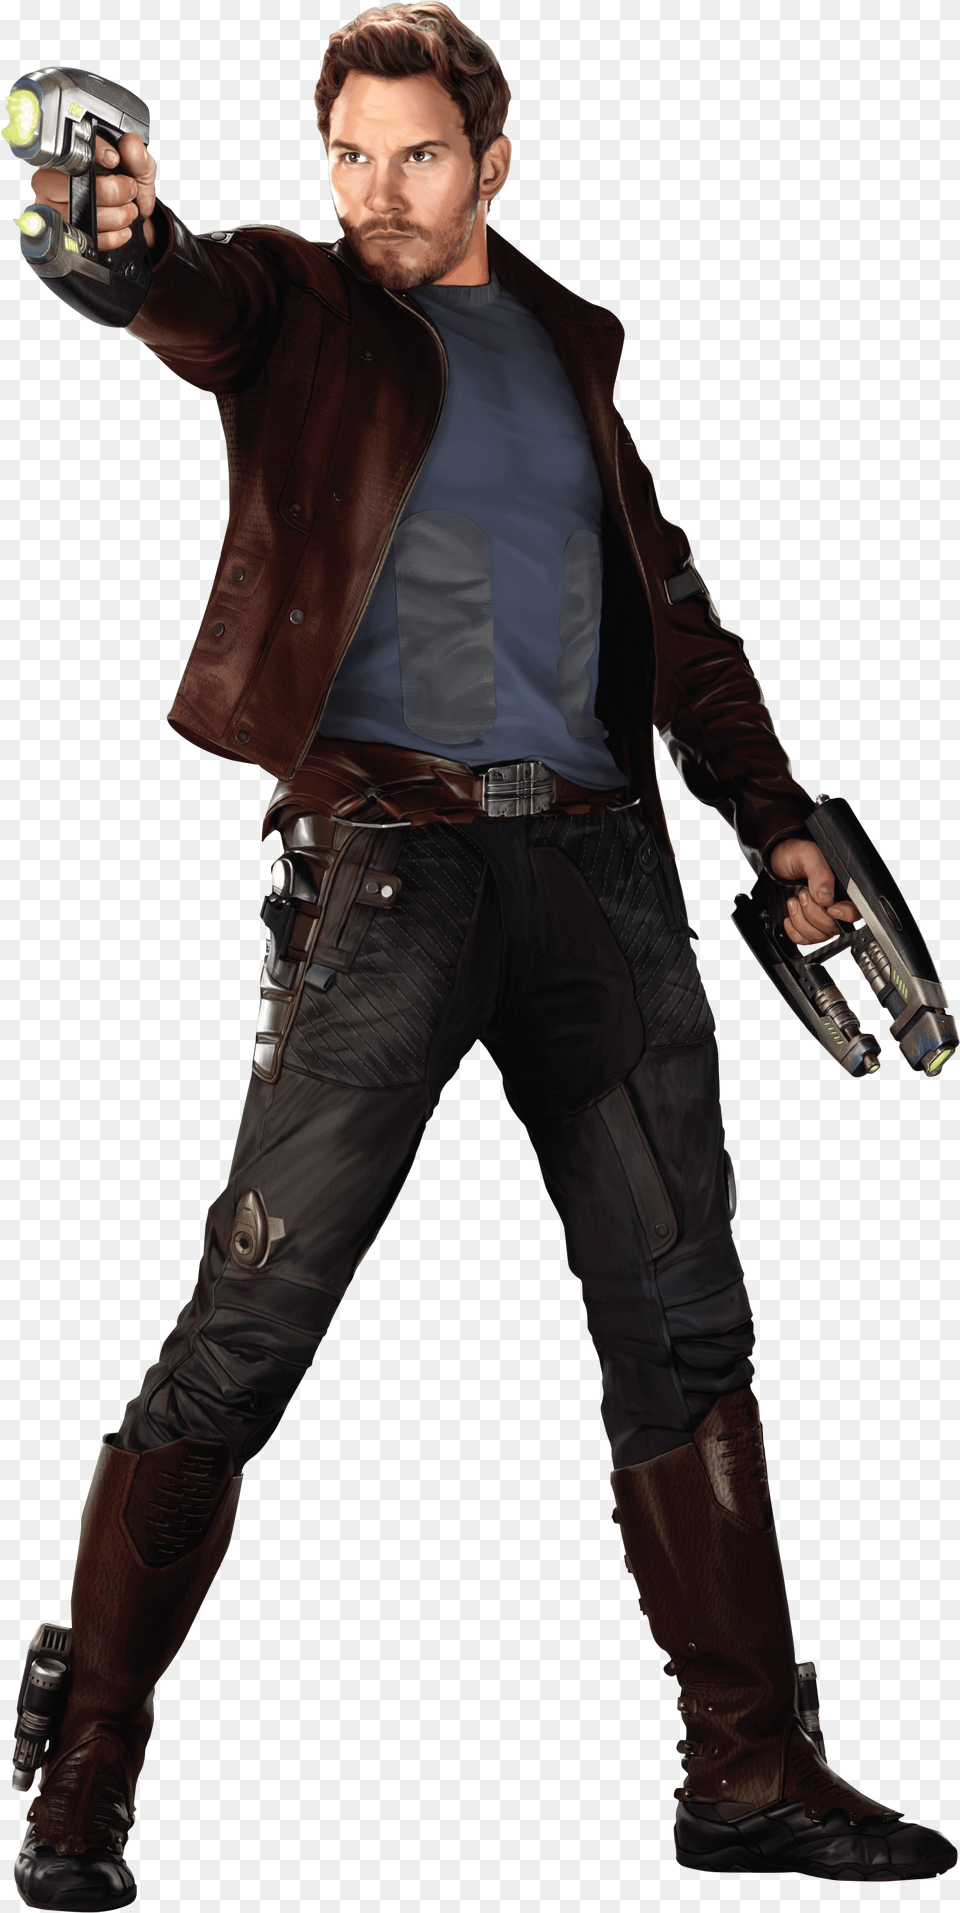 Star Lord File Chris Pratt Star Lord Costume, Weapon, Jacket, Handgun, Gun Png Image